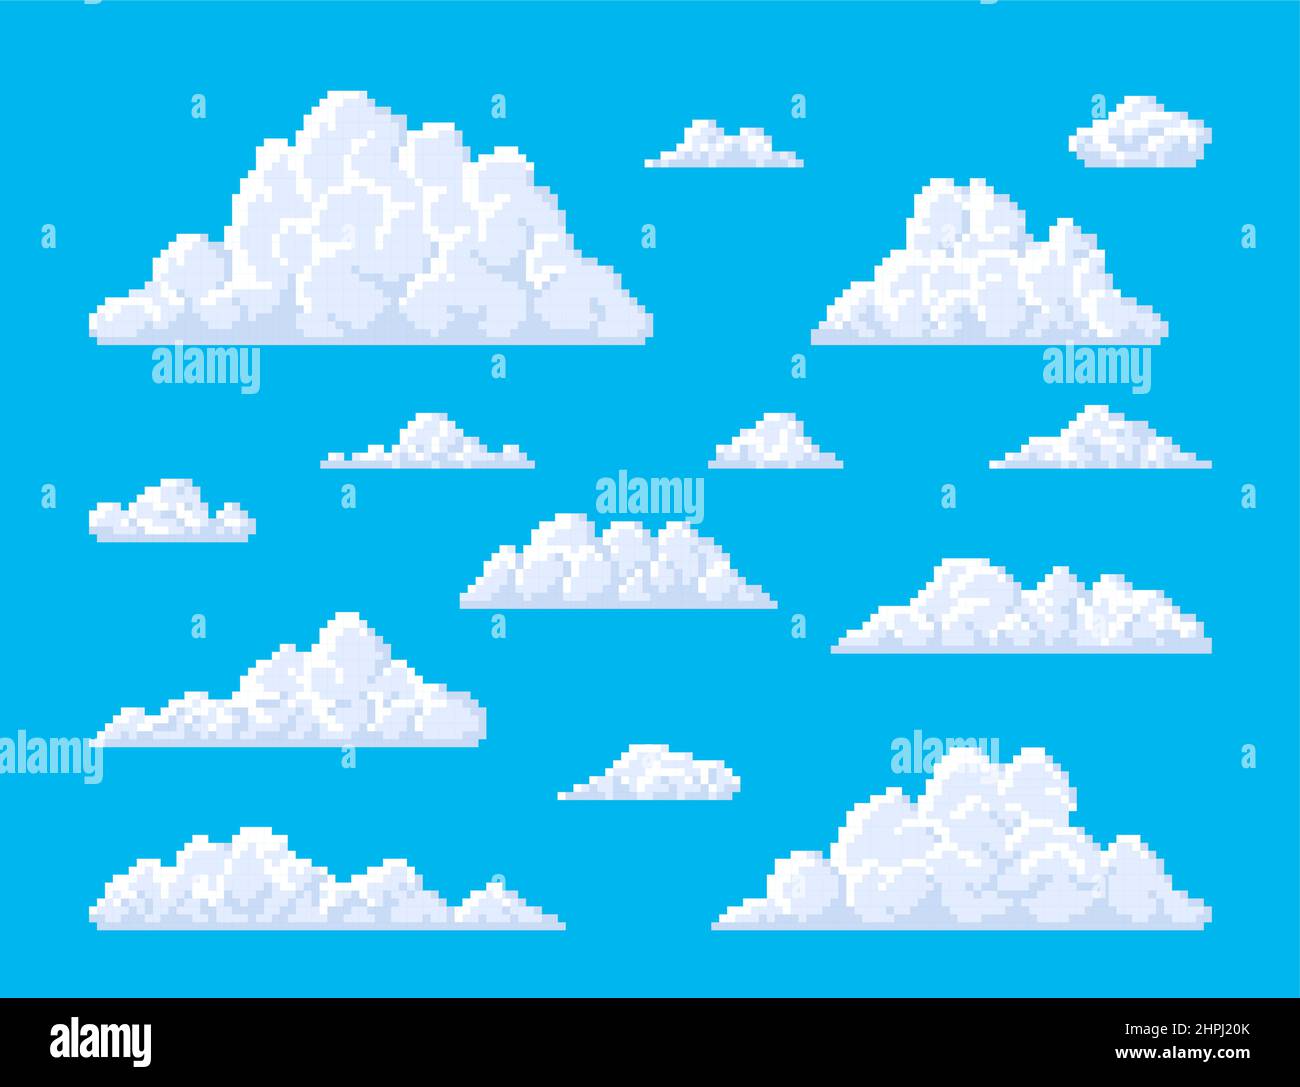 pixel sky backgrounds